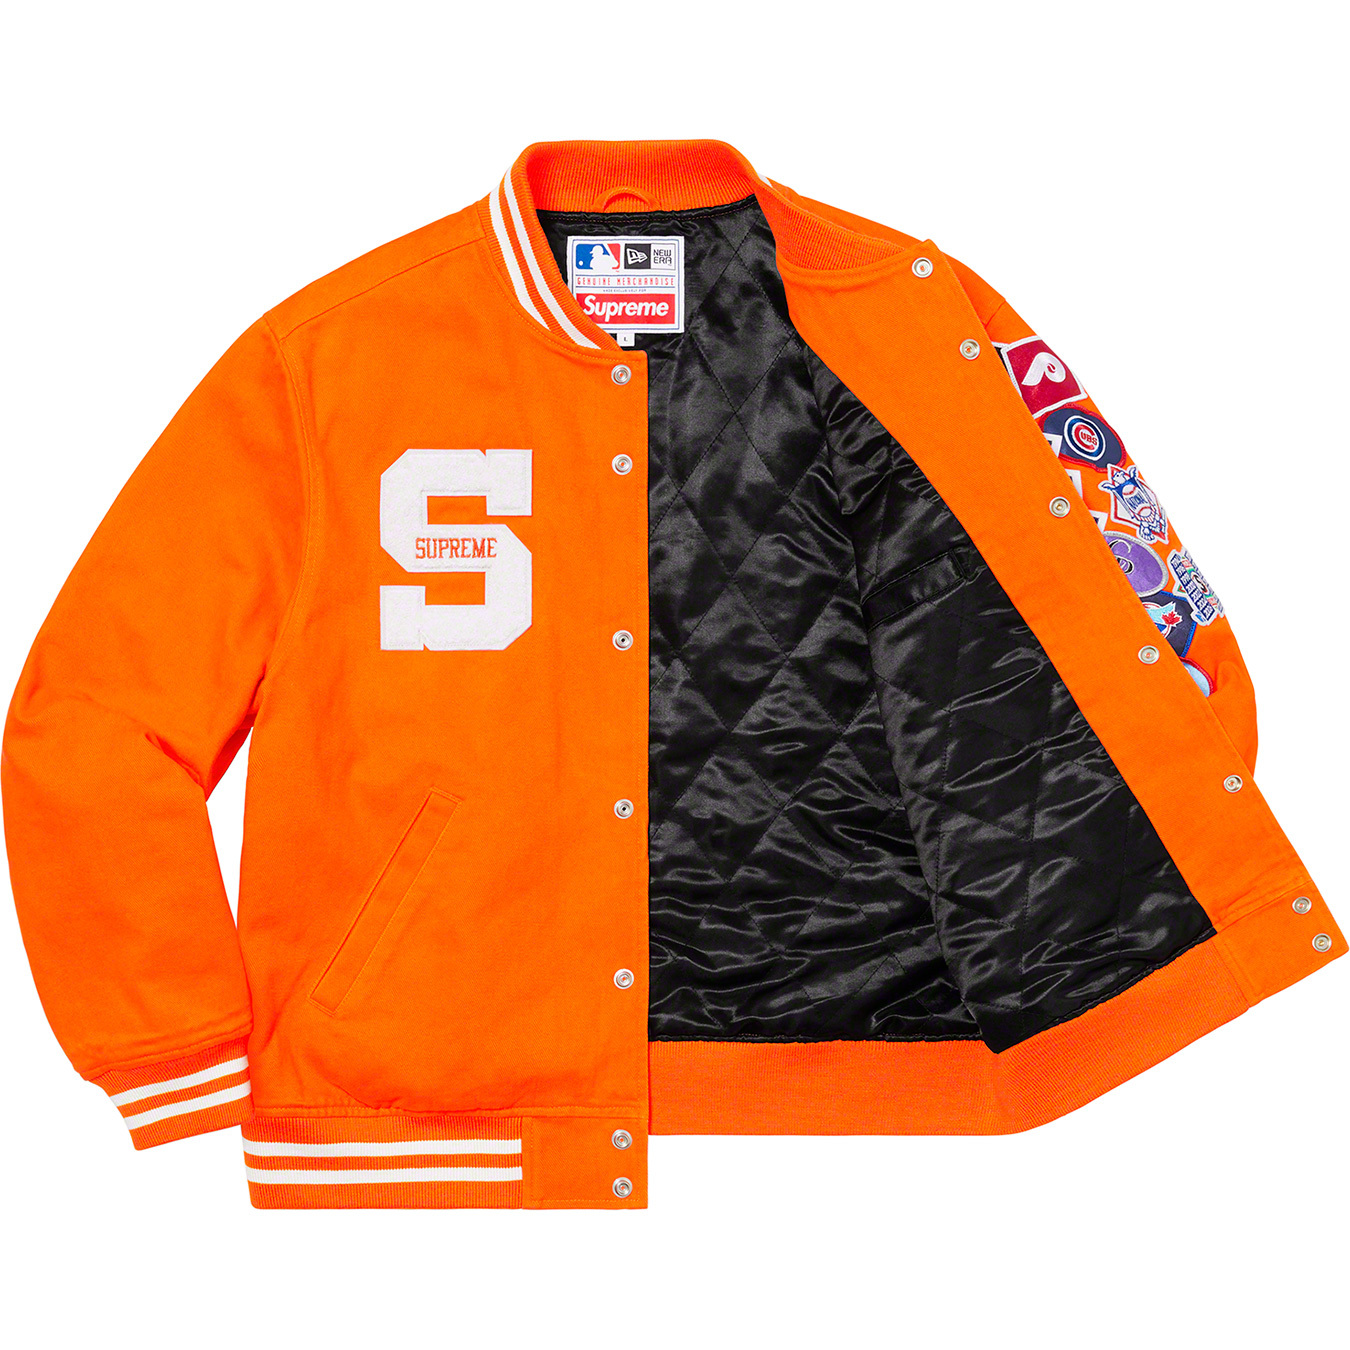 Supreme®/New Era®/ MLB Varsity Jacket - Spring/Summer 2020 Preview – Supreme